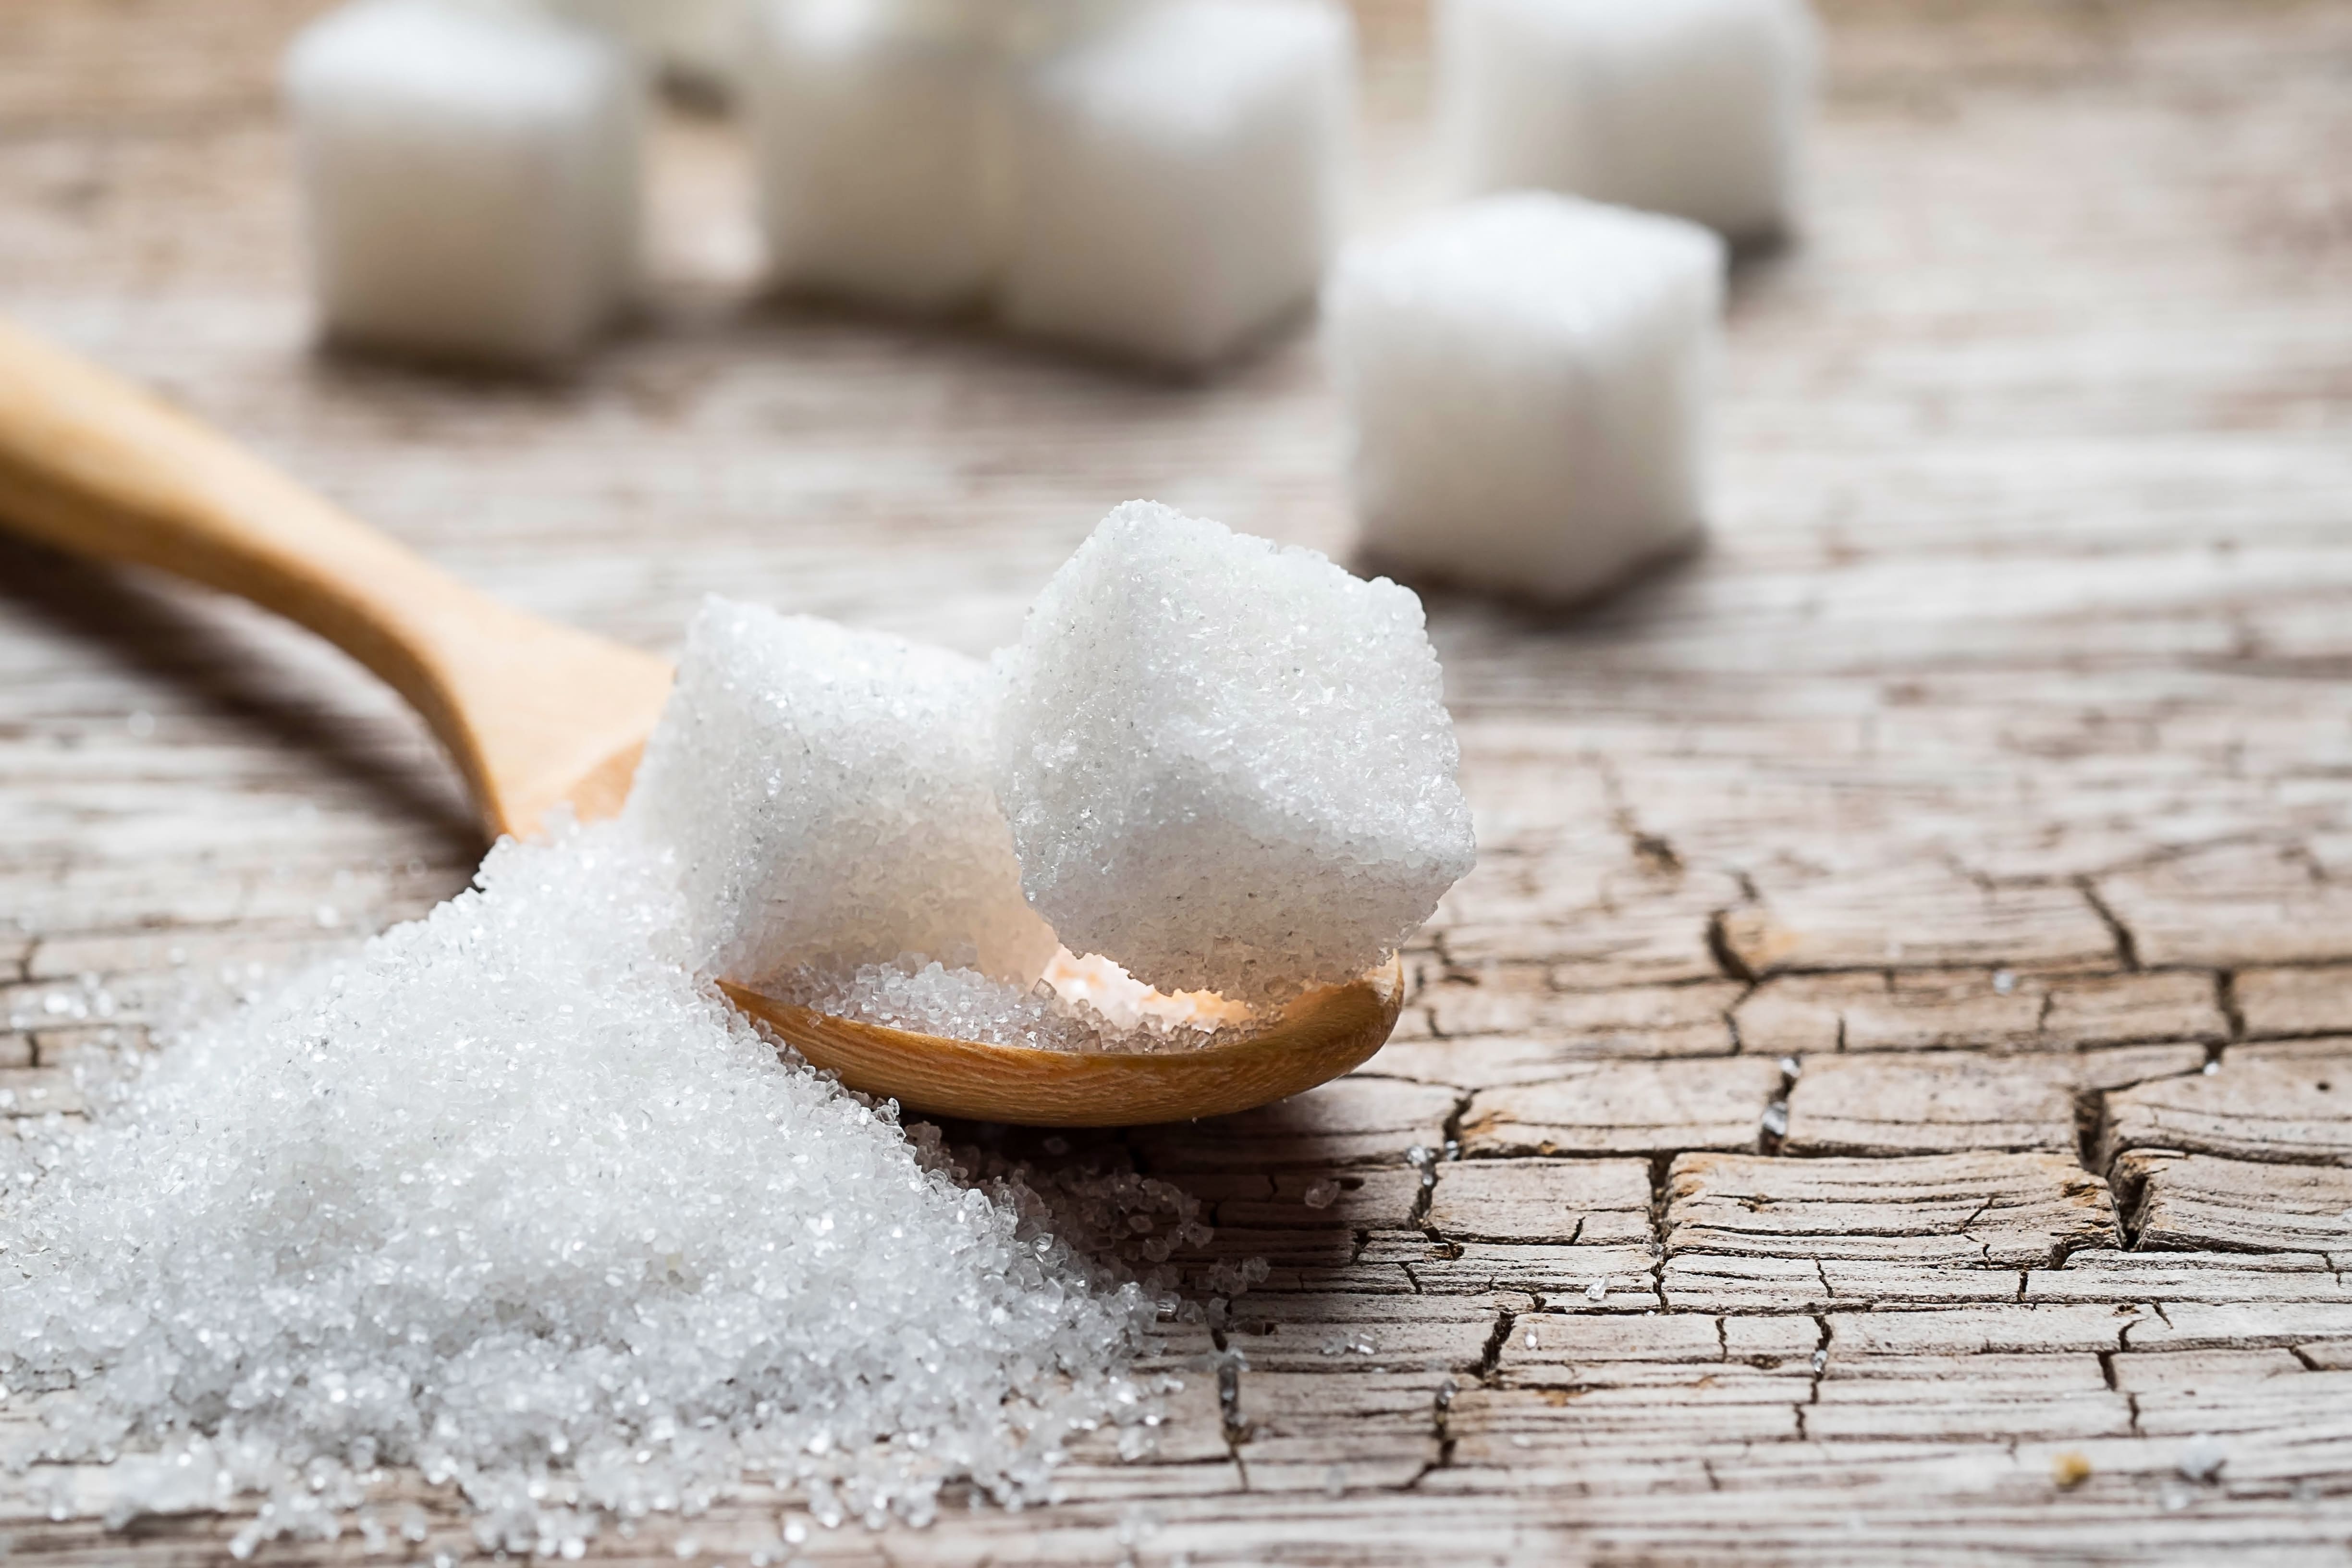 Sugar harms the gut